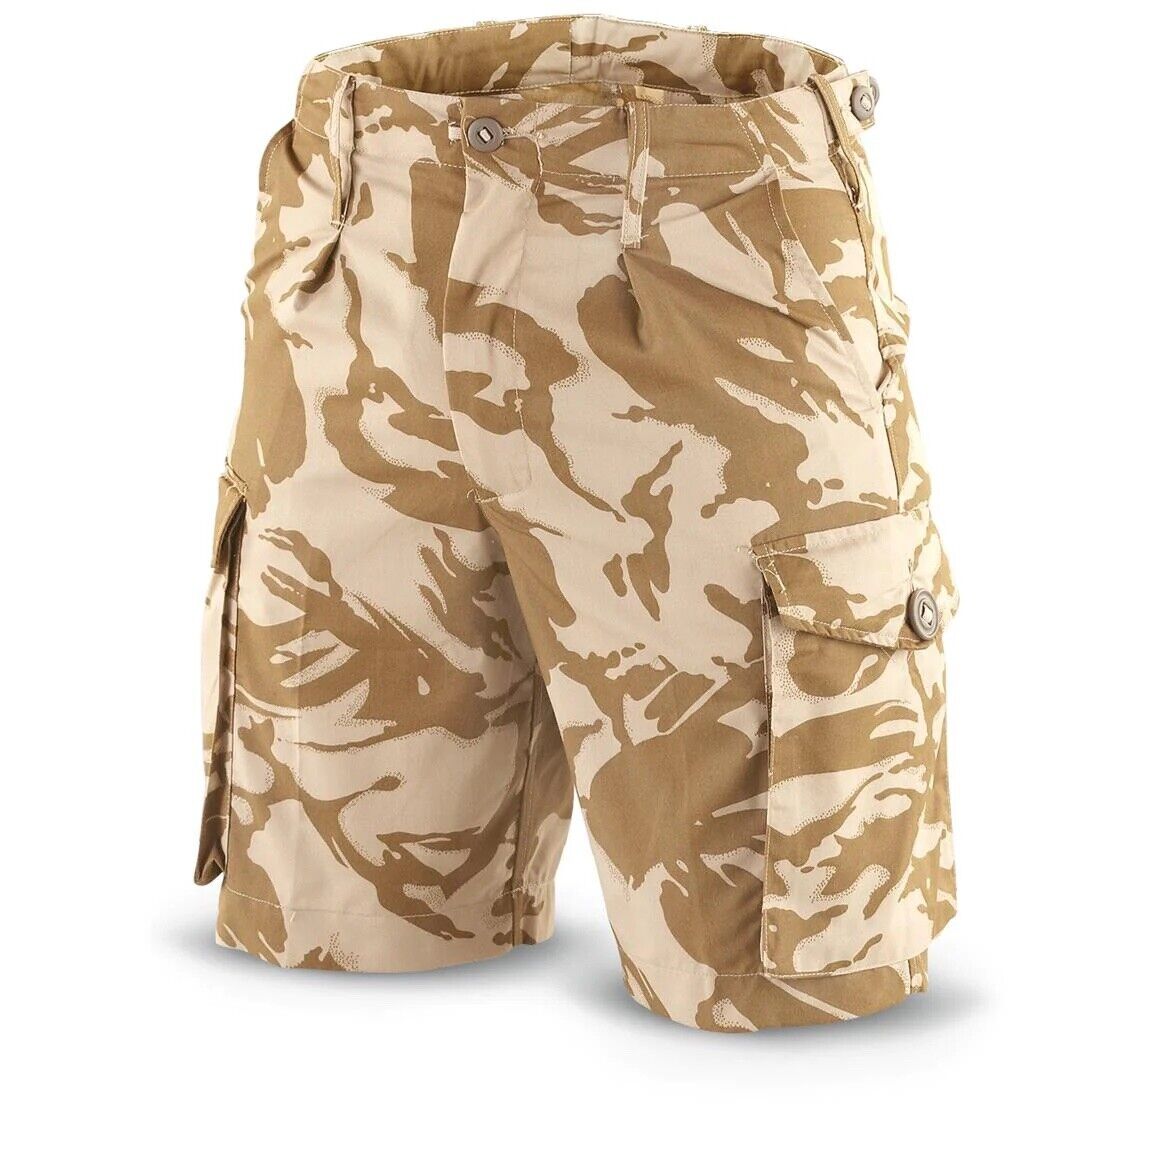 British Army desert shorts, new unissued, most still in packet